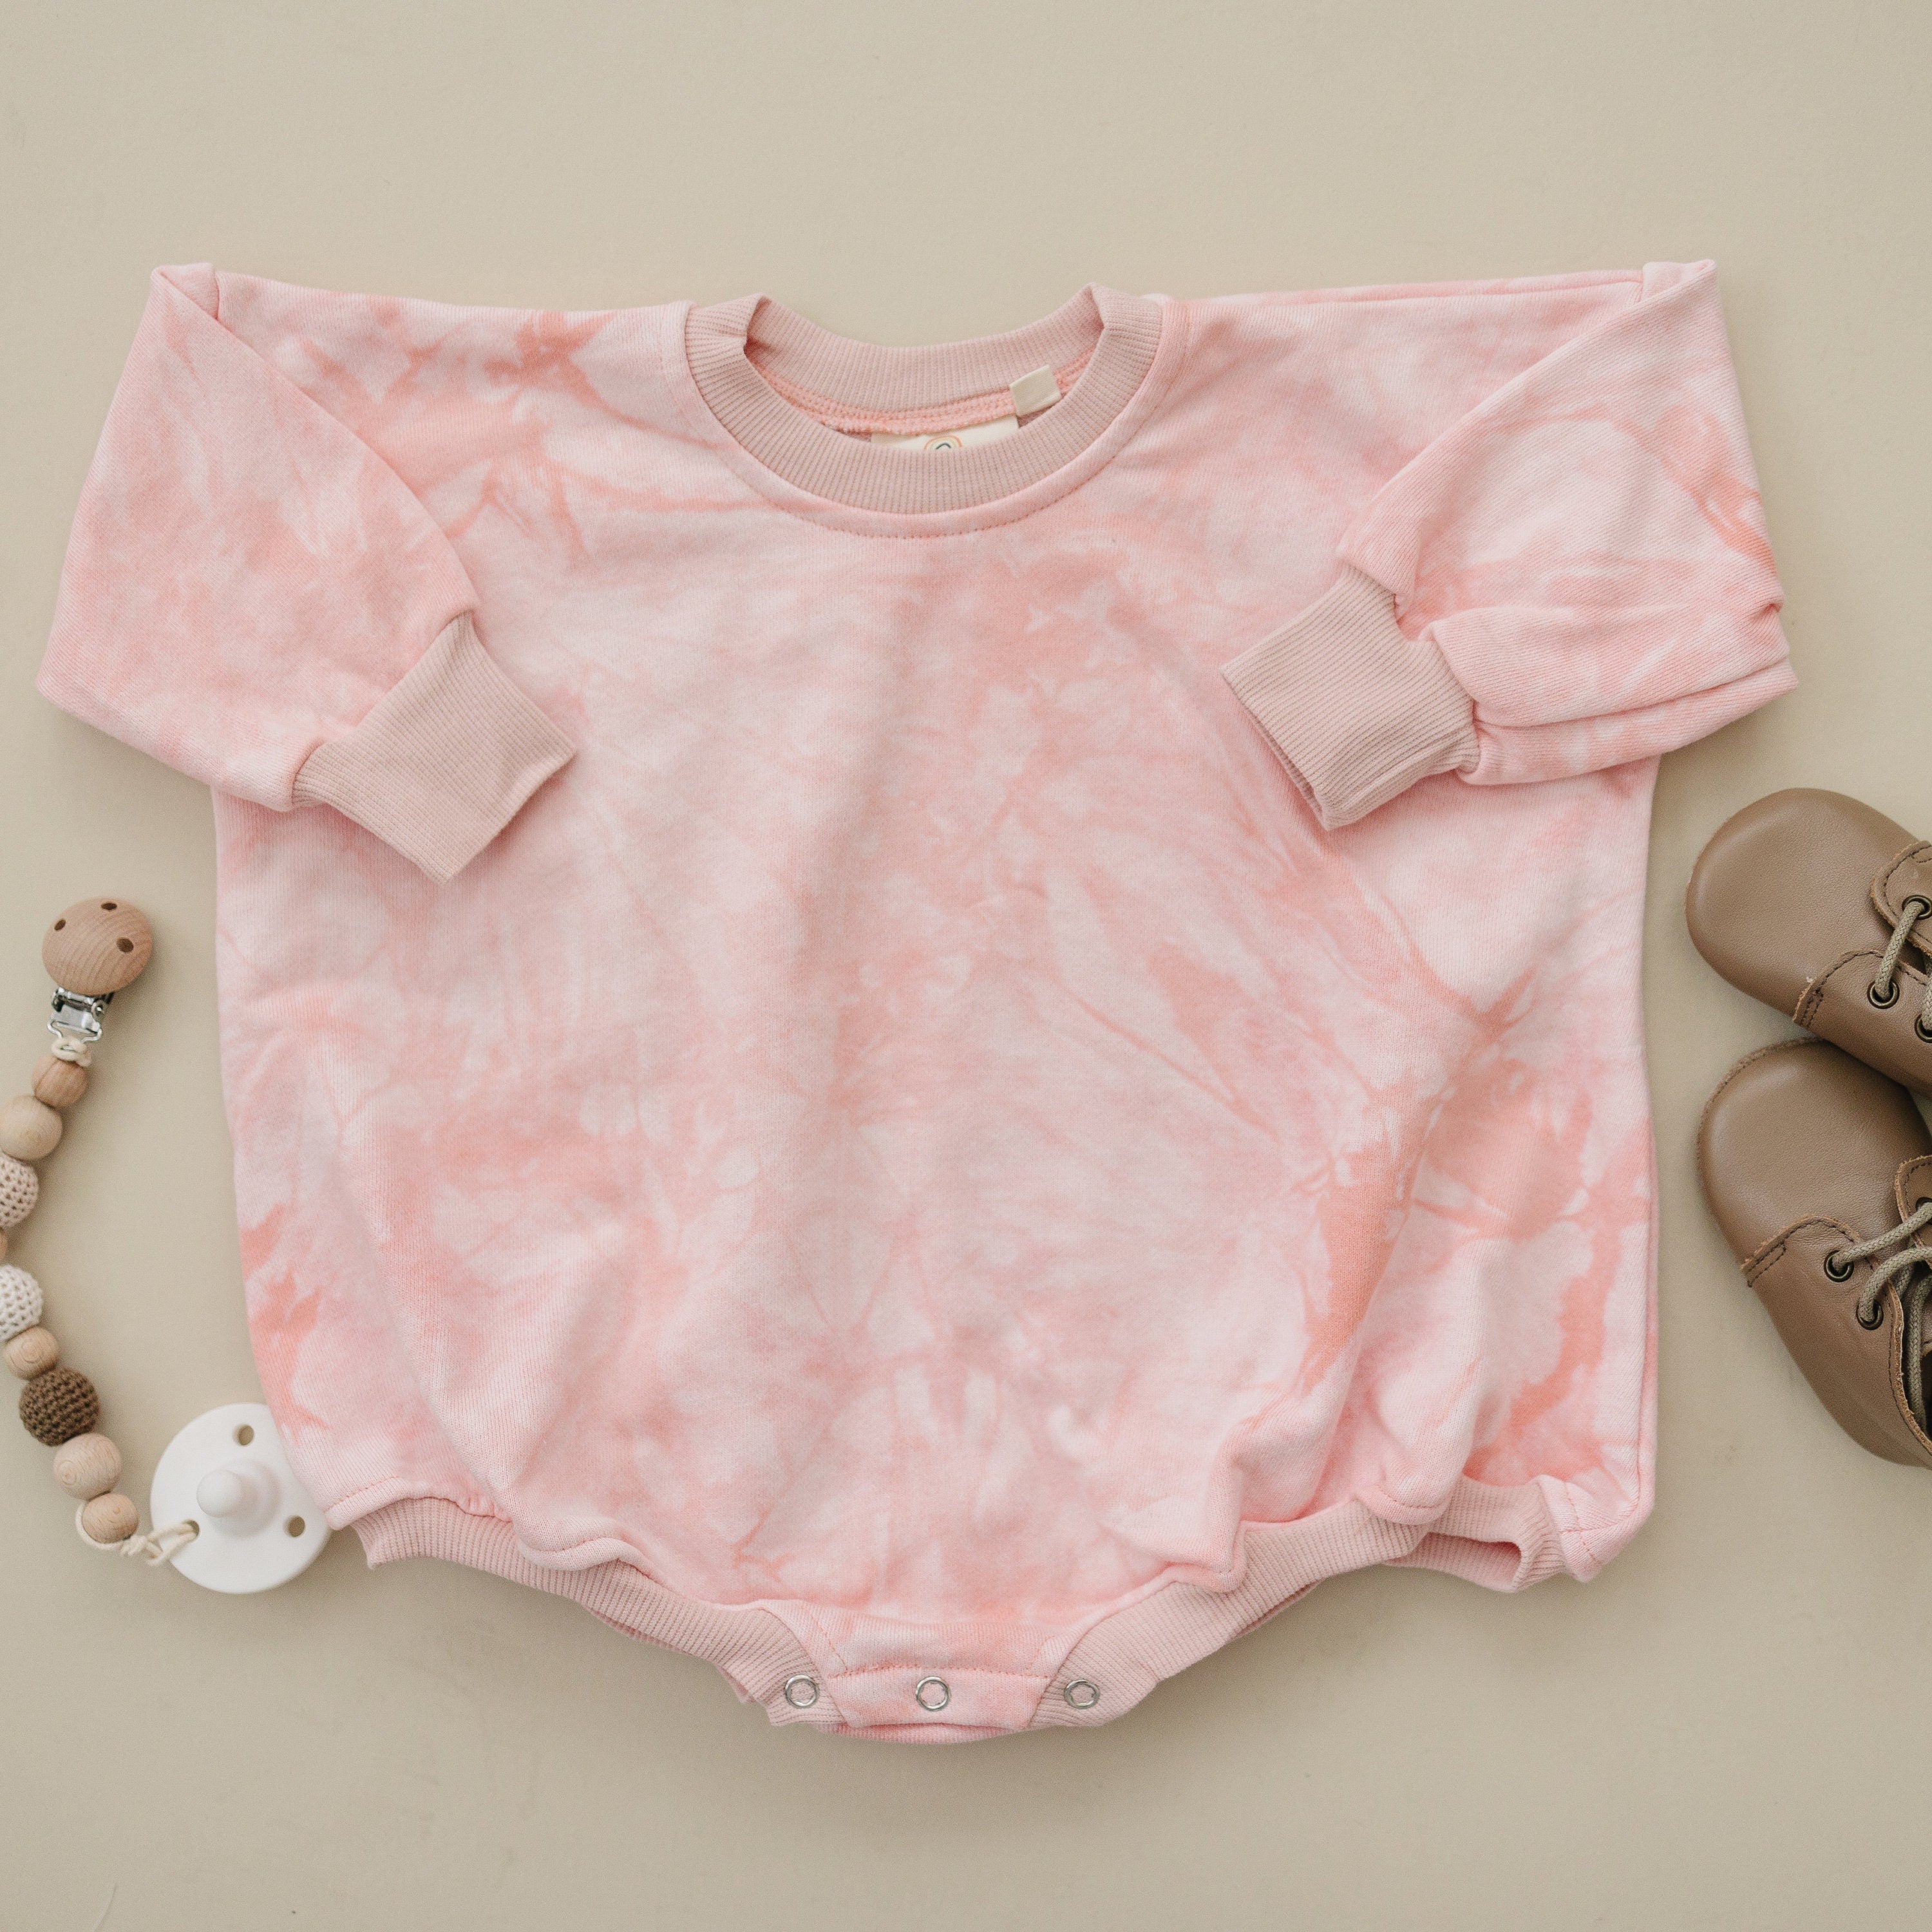 Pink & White Tie Dye Oversized Sweatshirt Romper or Crewneck Sweatshirt - Bubble Romper - Cousin Matching - Baby Toddler Girl Boy